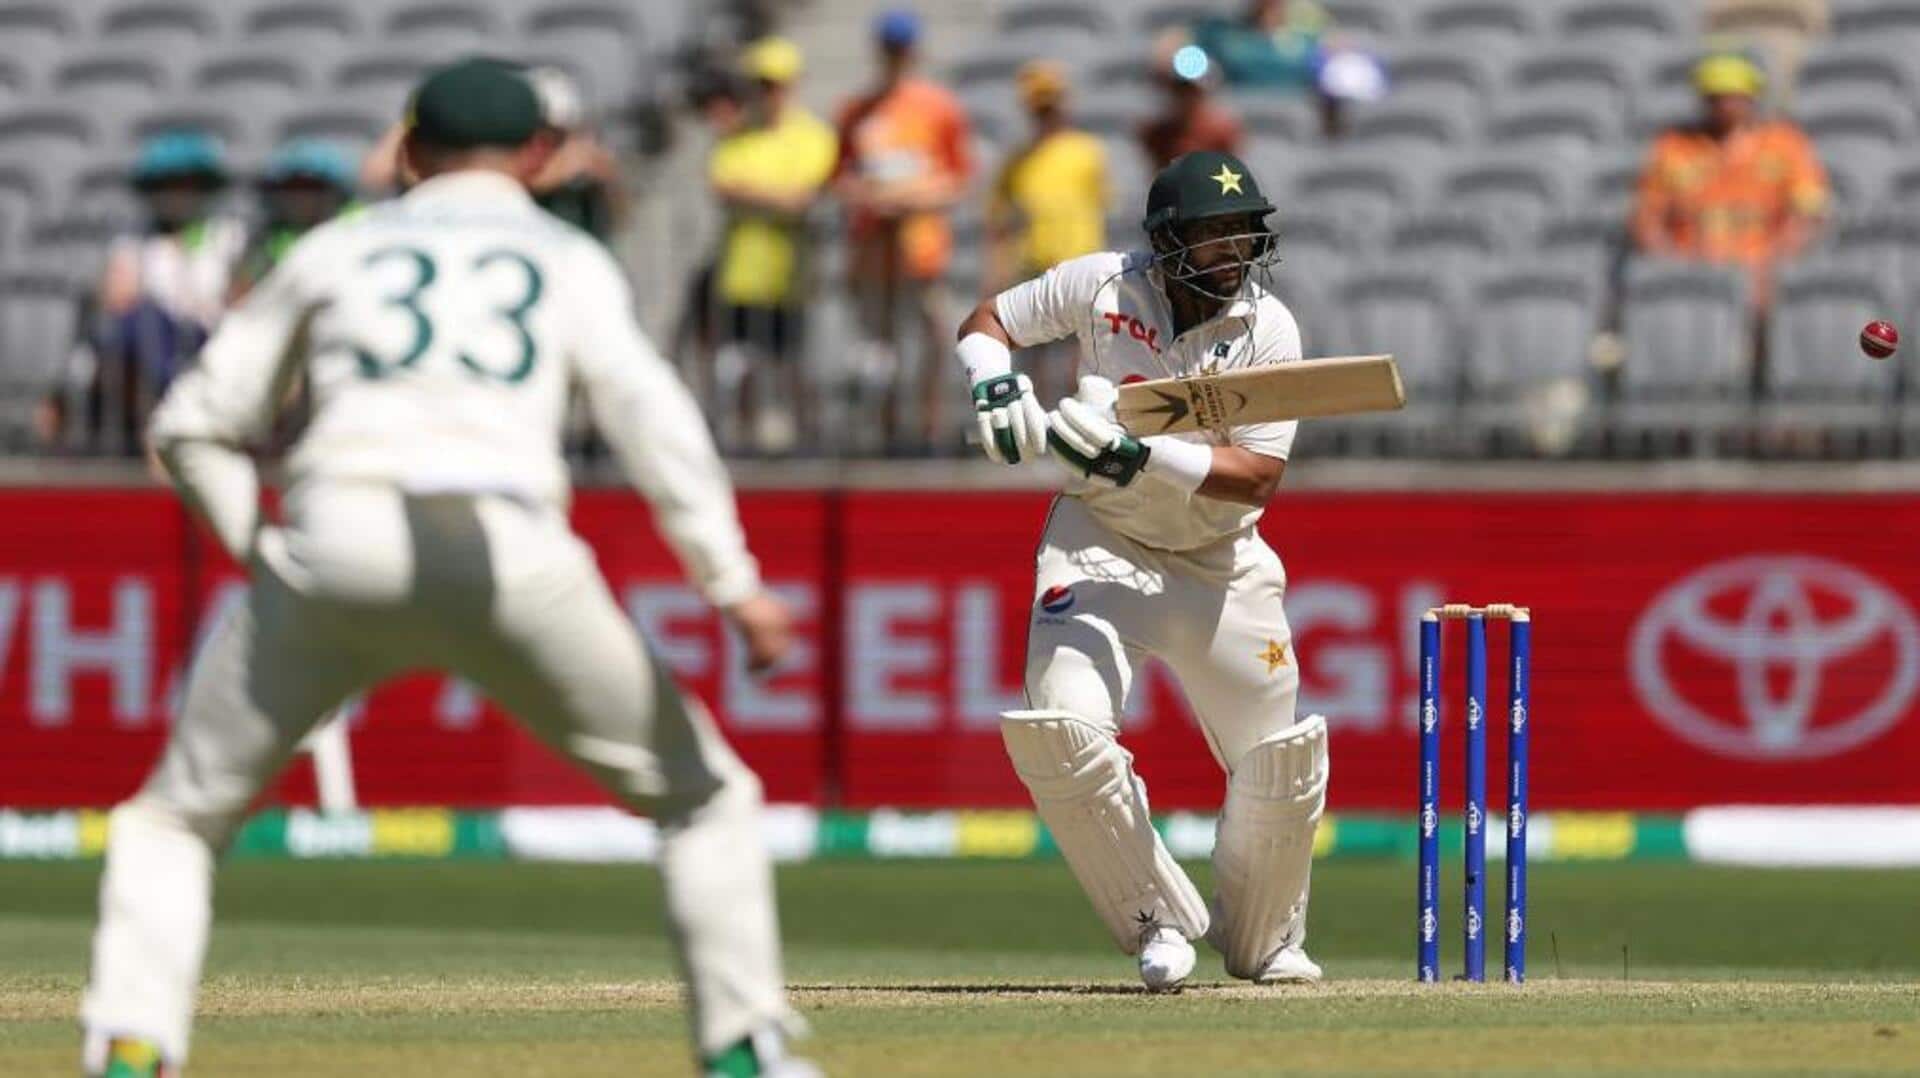 Australia thrash Pakistan in first Test: Key takeaways